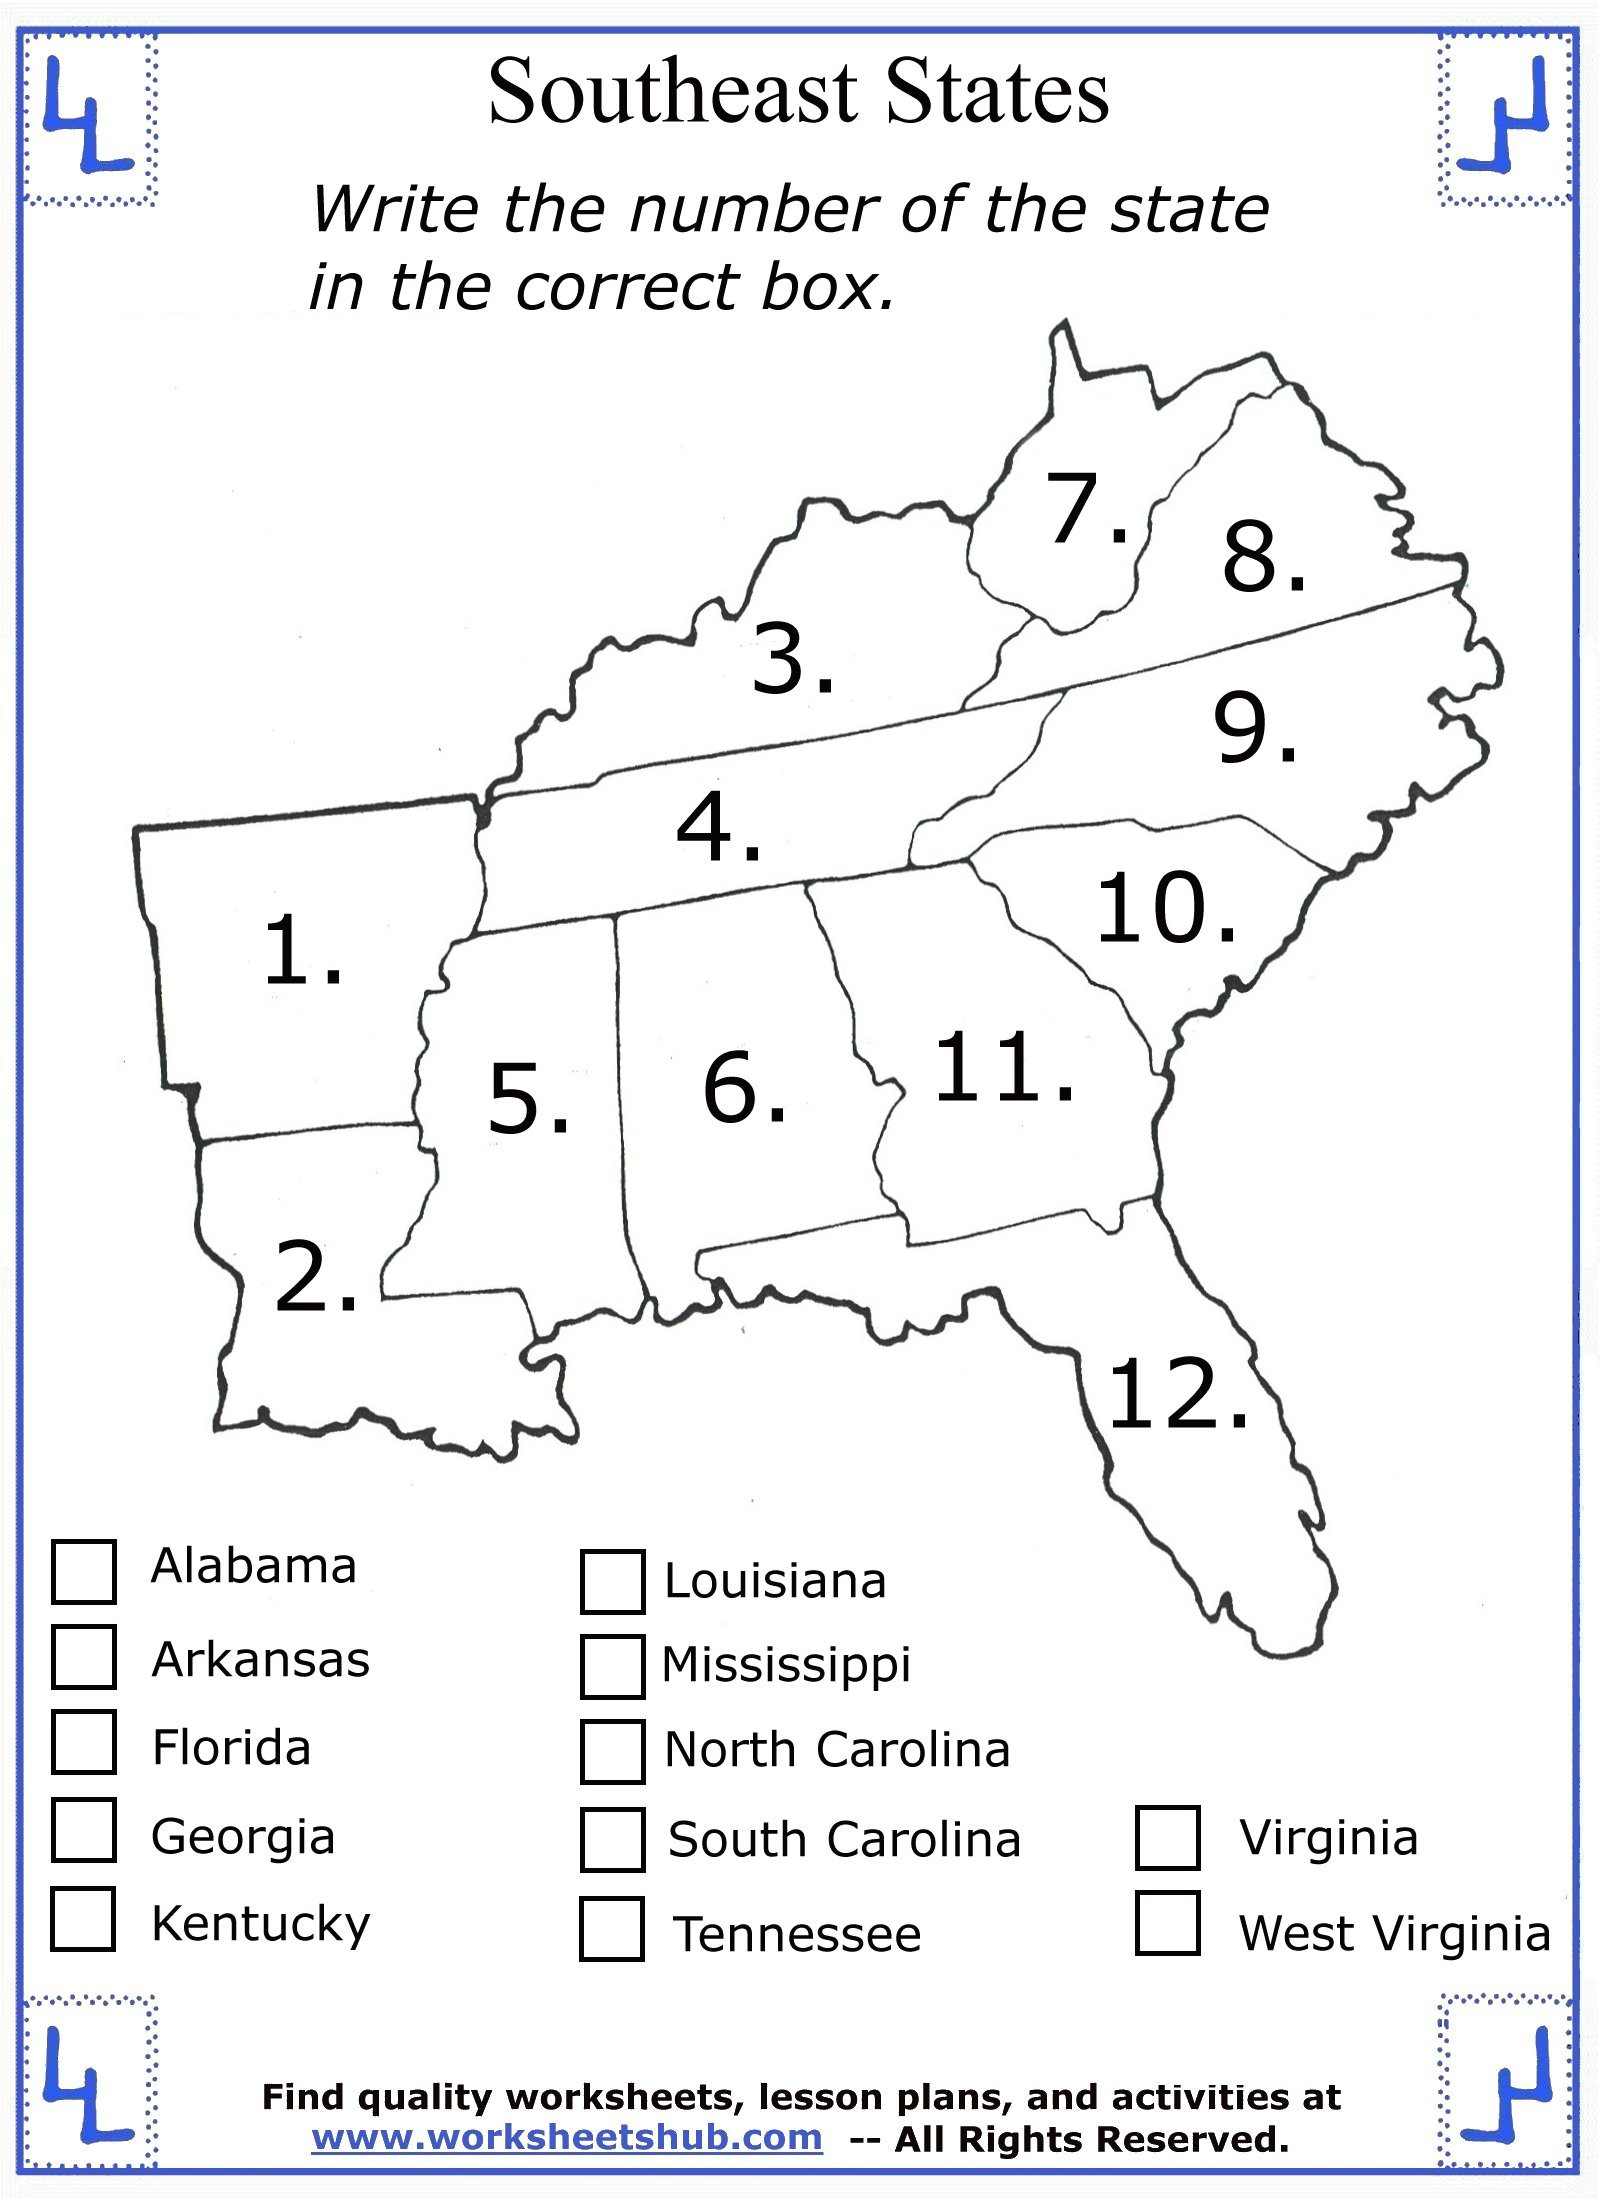 First Grade History Worksheets 4th Grade social Stu S southeast Region States